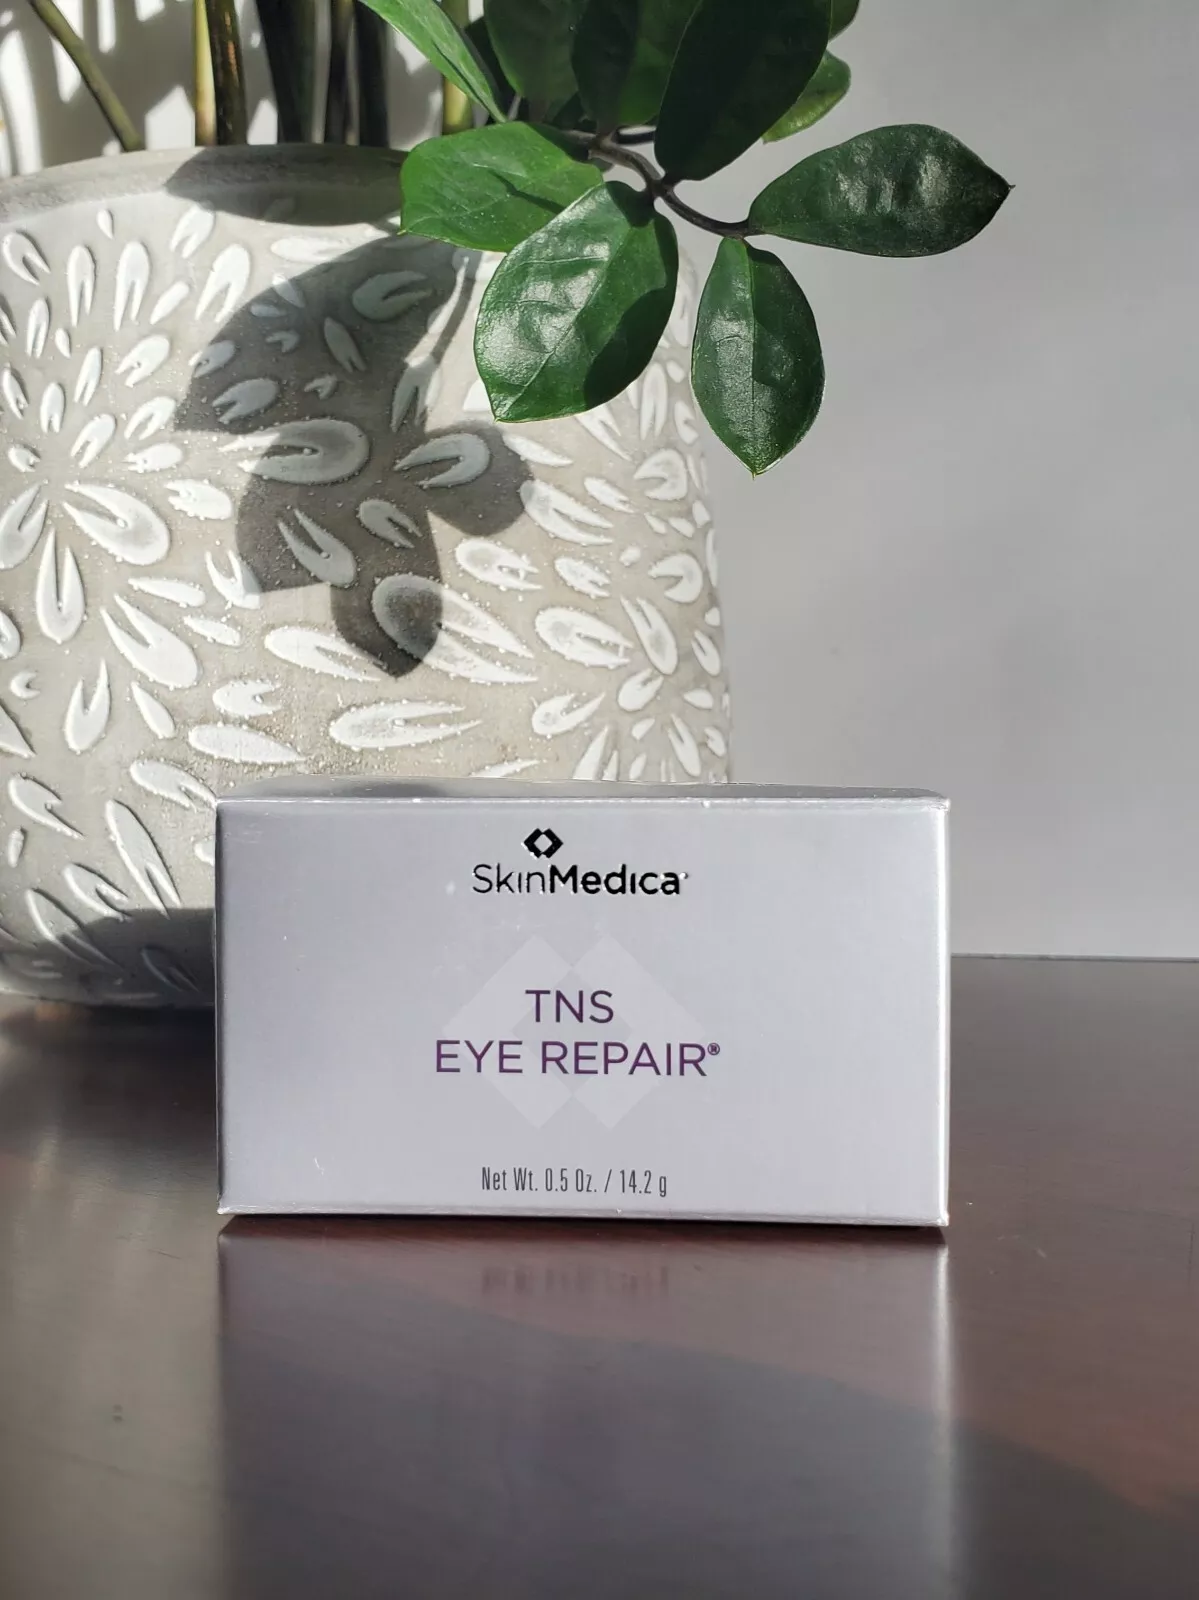 SkinMedica - TNS EYE REPAIR CREAM ~ Net wt. 14.2 g / 0.5 oz. Sealed BOX FRESH!  - $67.88